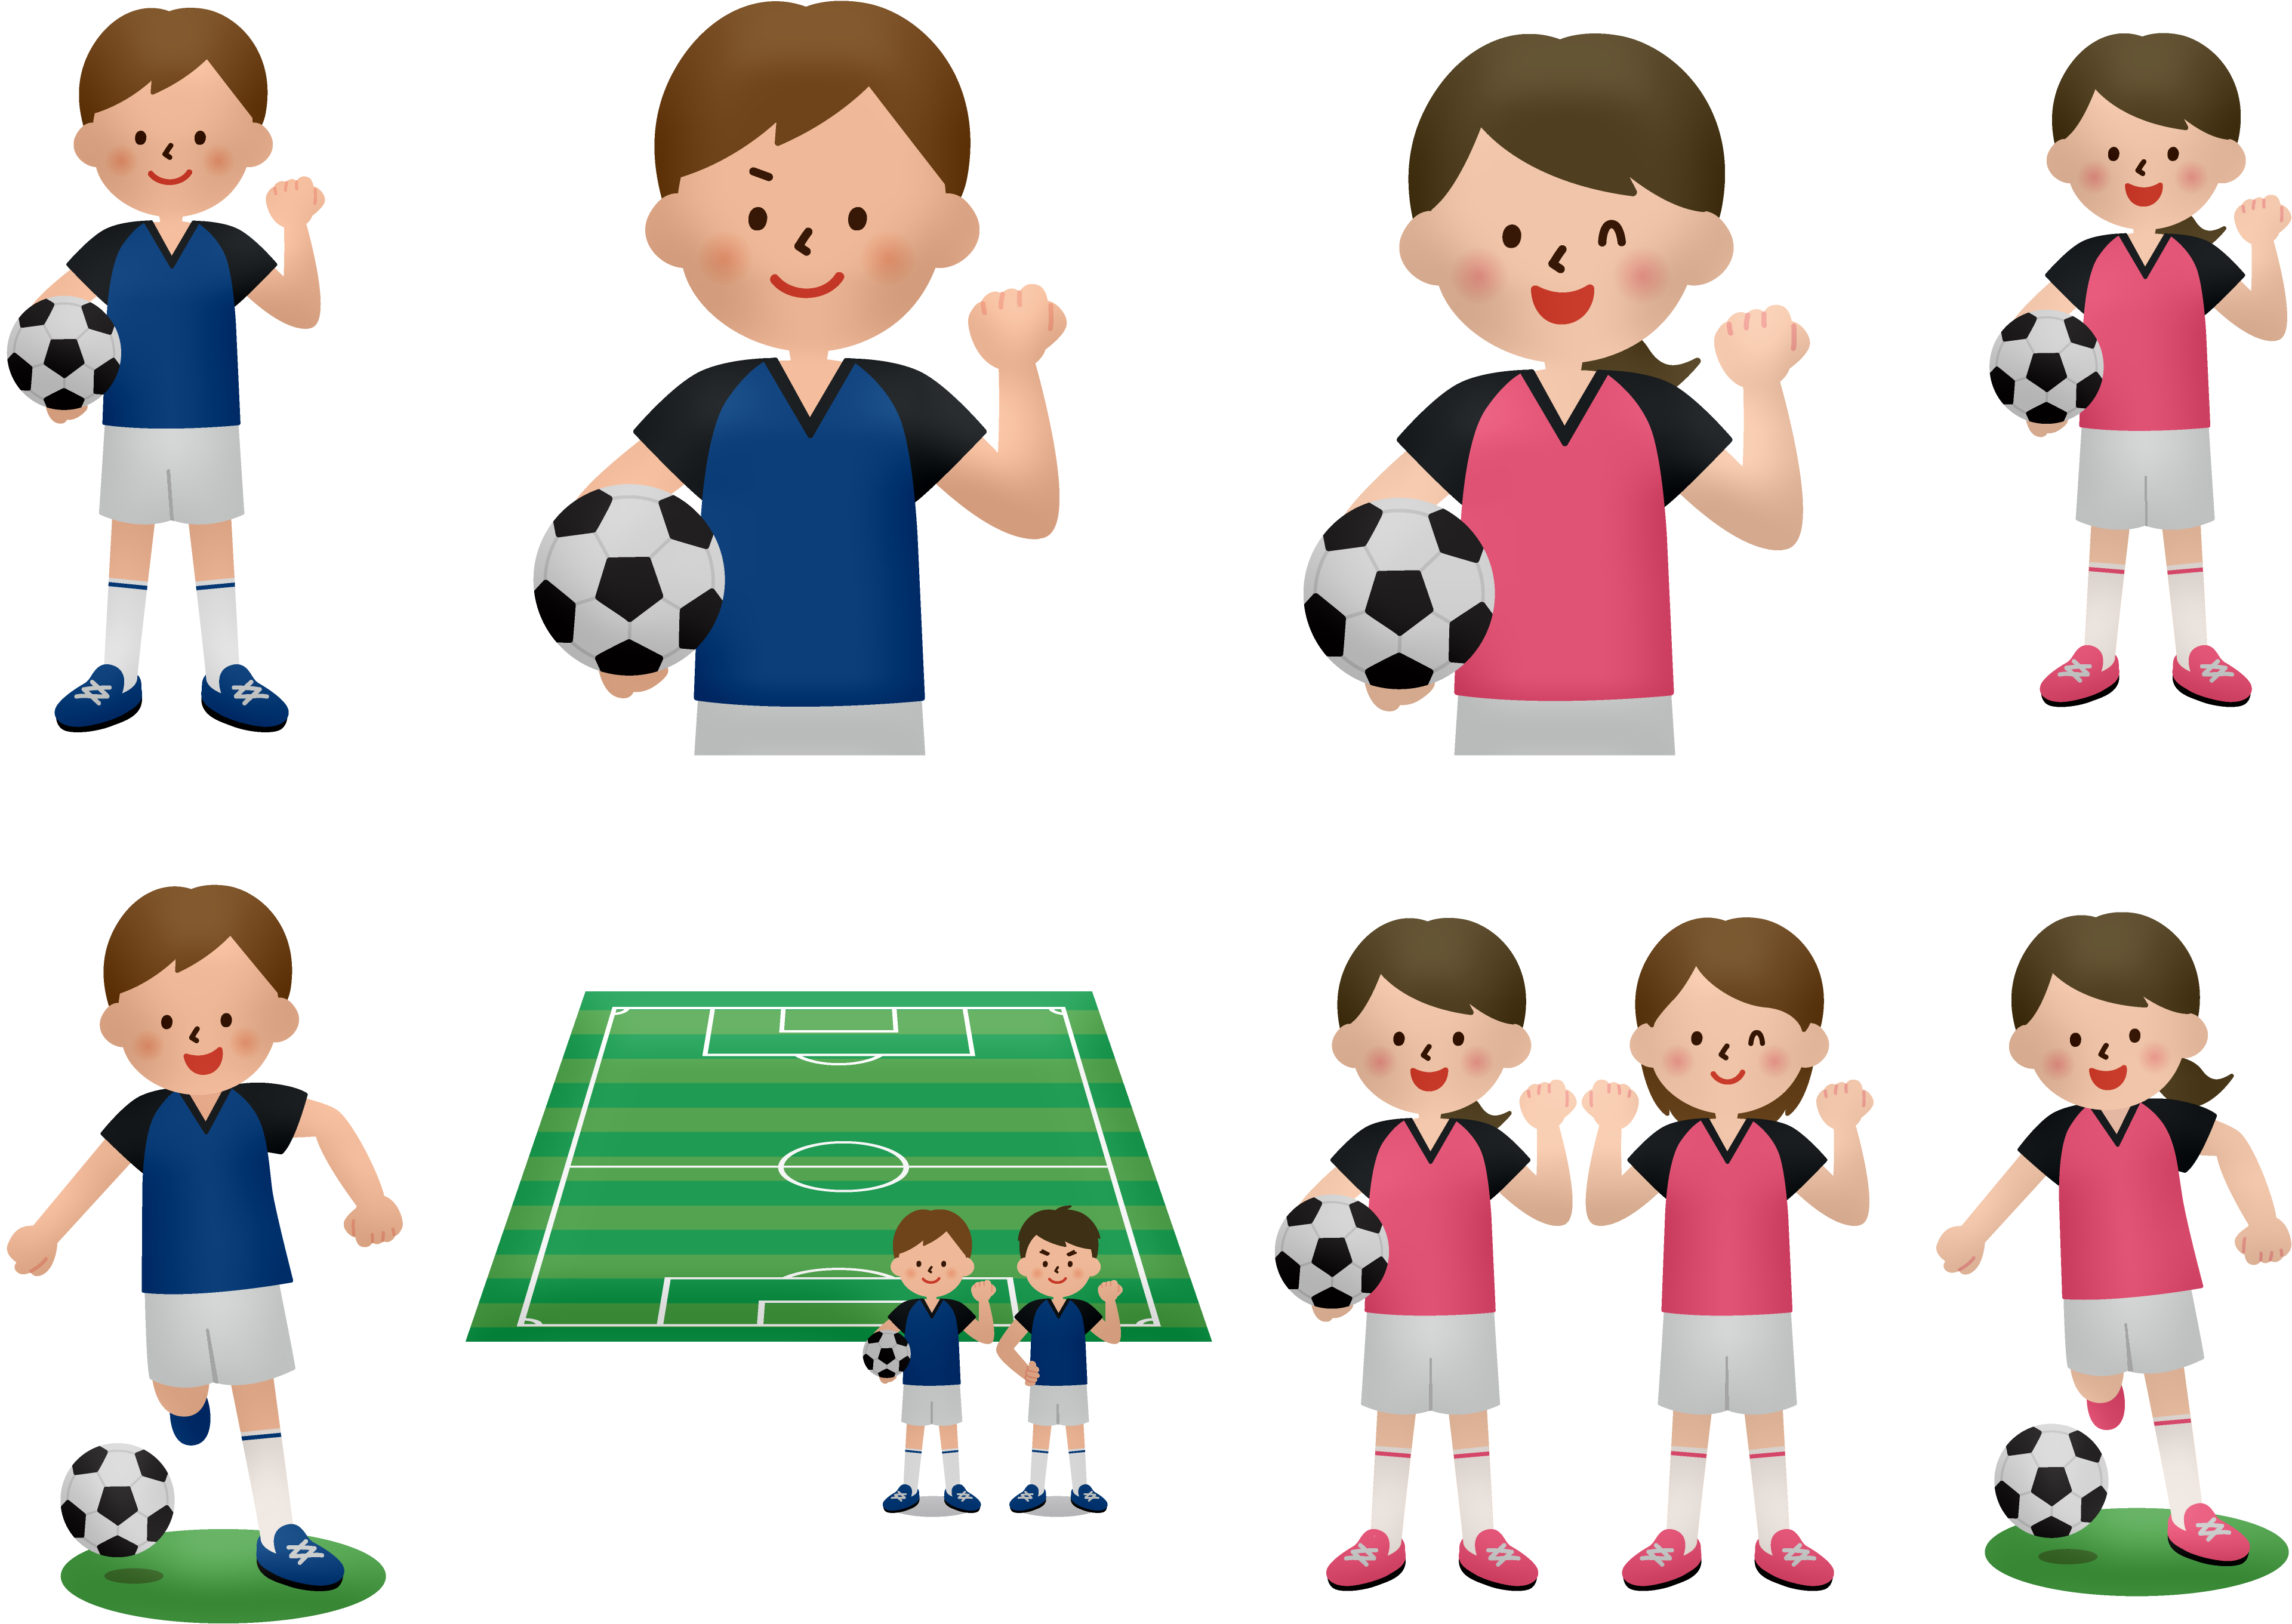 Футбол картинки для детей. Дети футболисты. Картинки футбол для детей дошкольного возраста. Игра в футбол картинки для детей. Игры для команд девочки